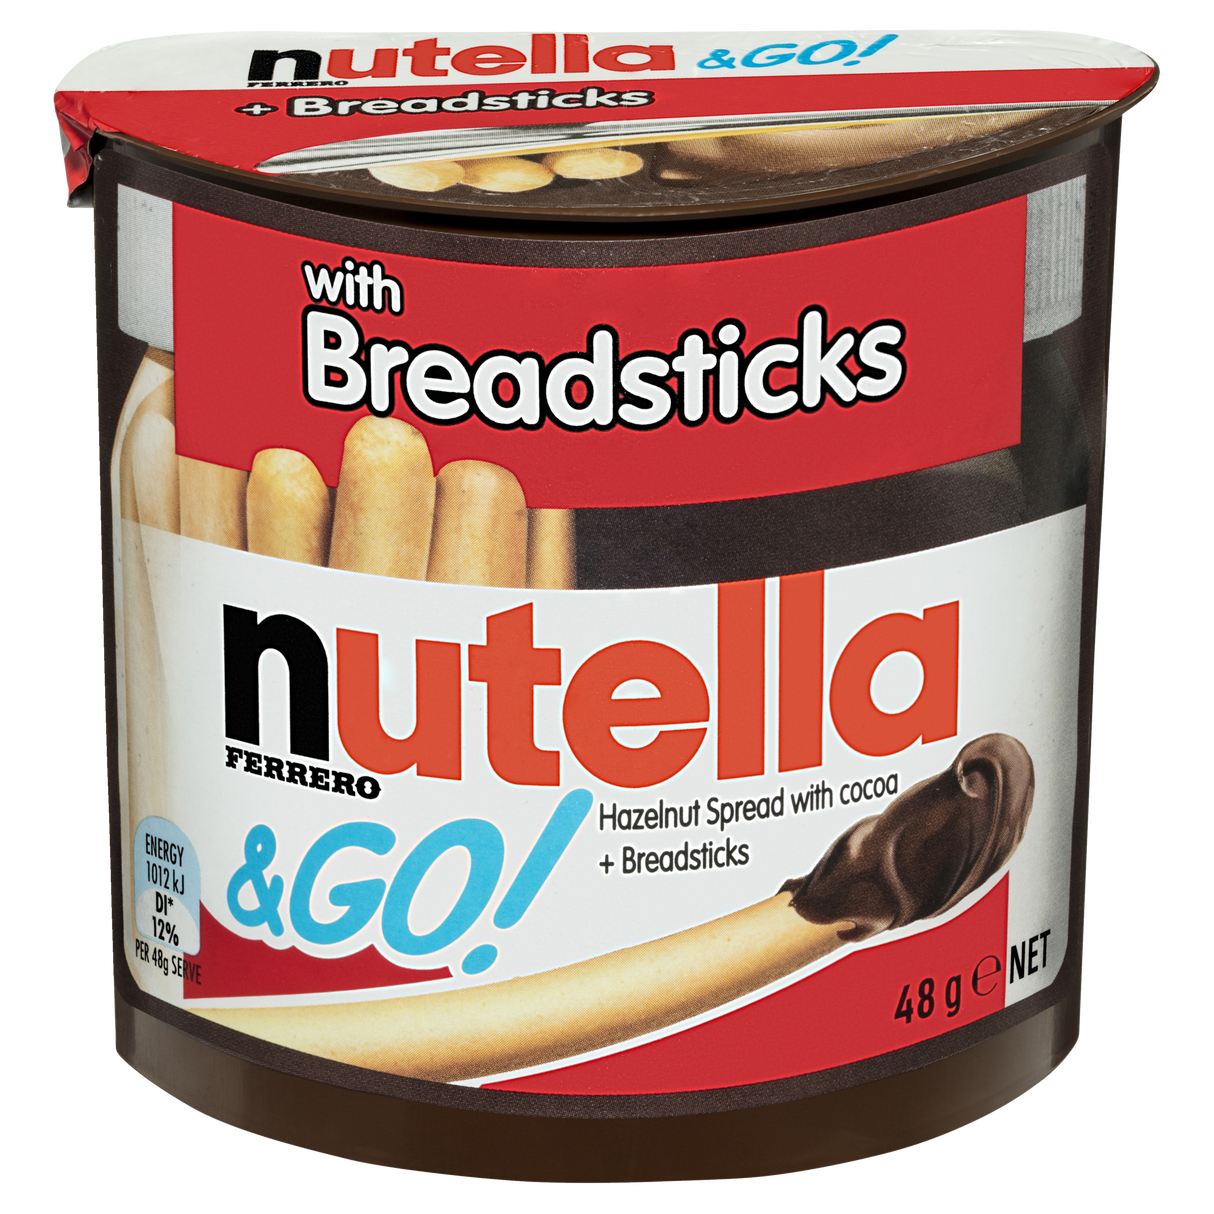 Nutella & Go Spread With Breadsticks 48g